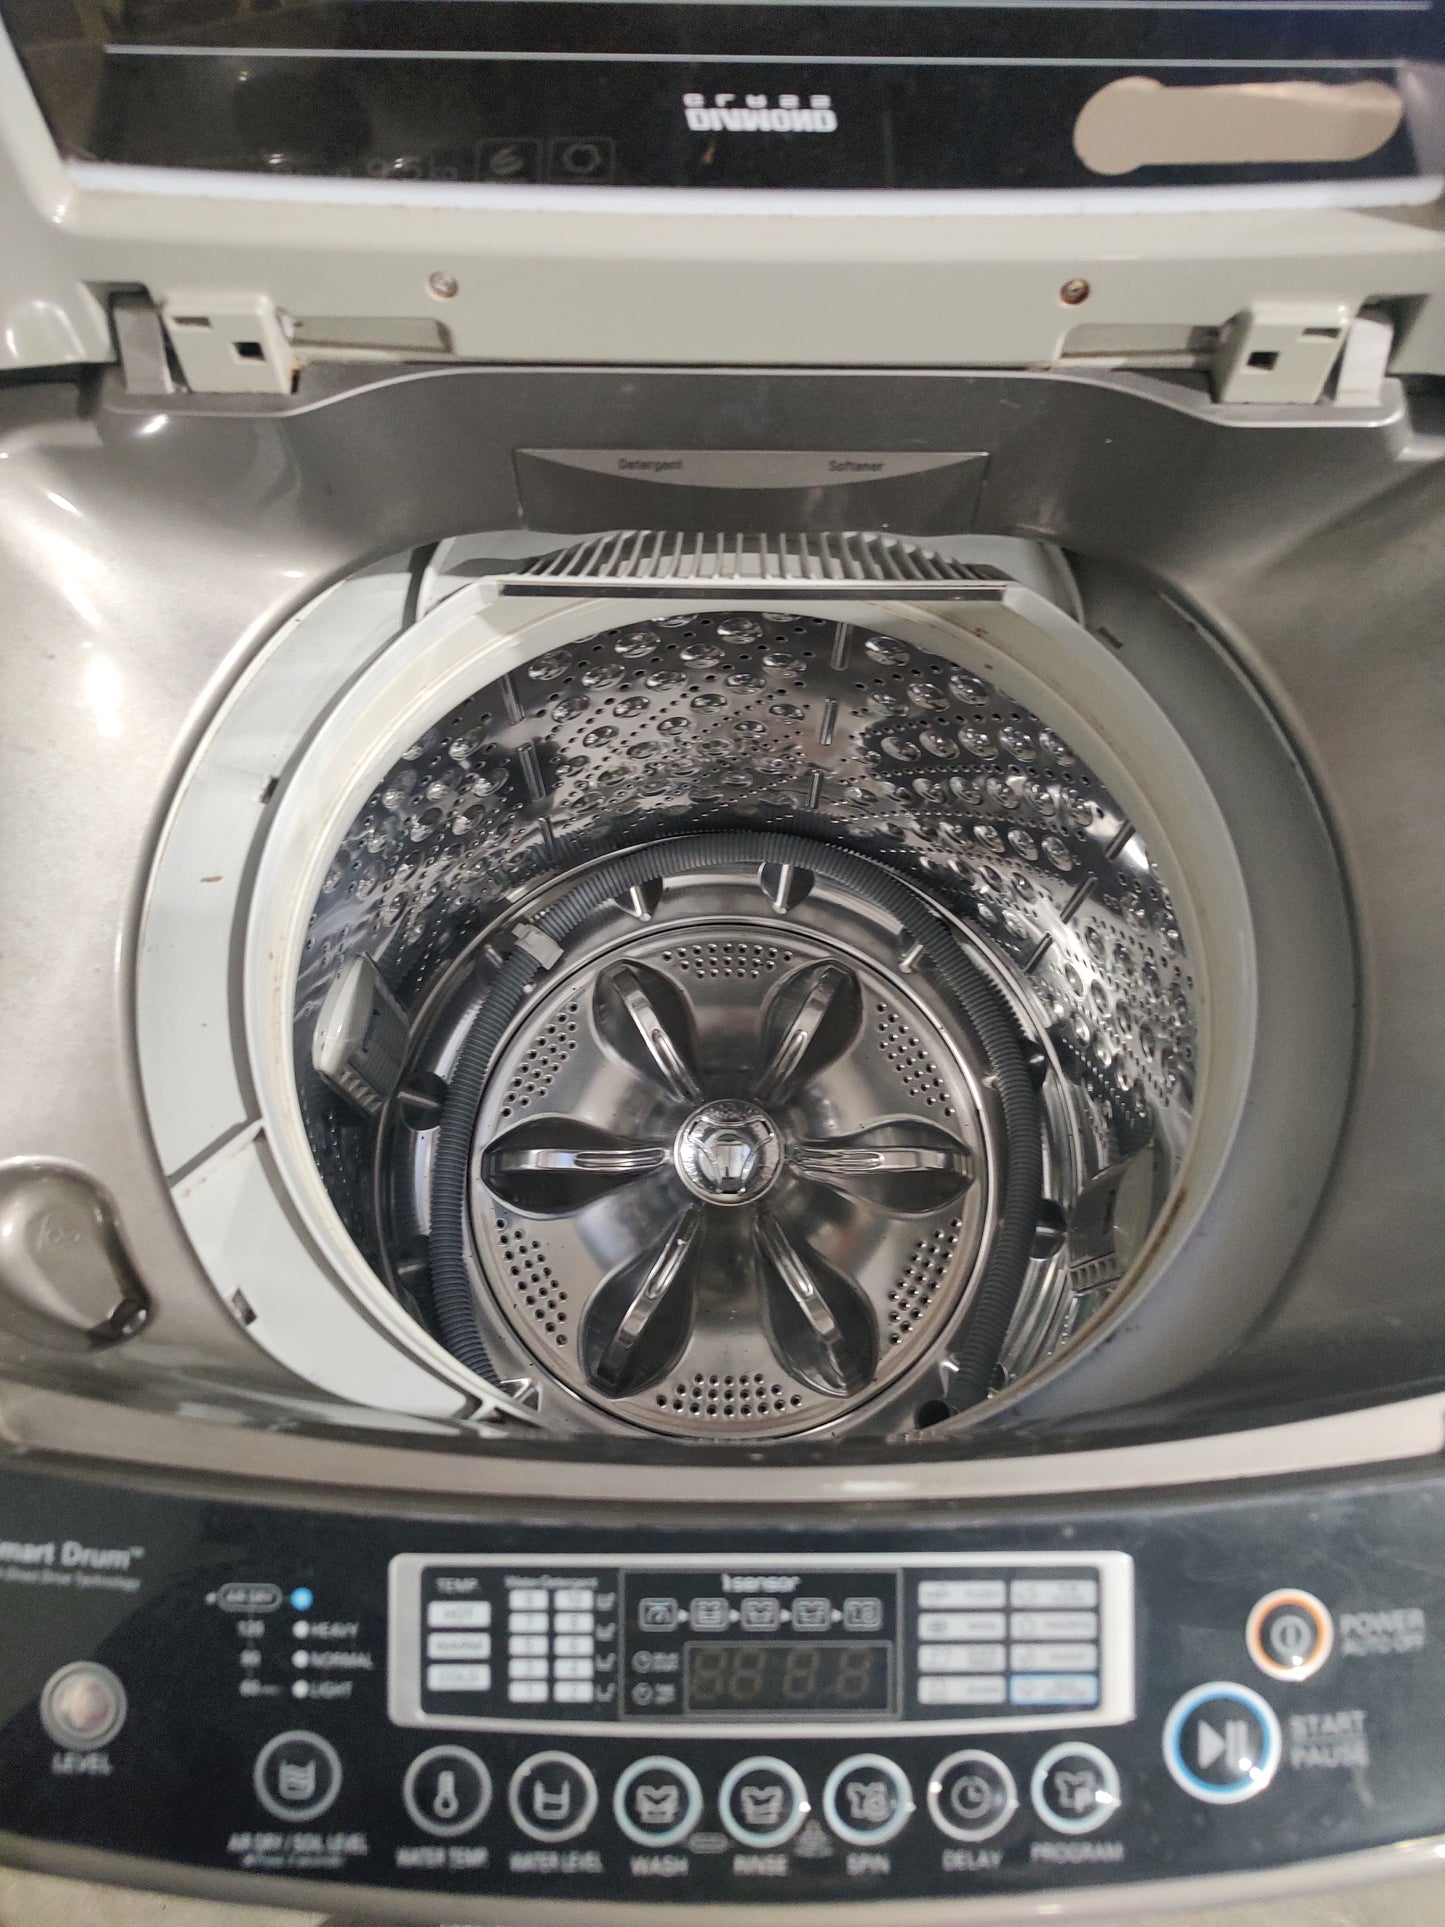 LG WTH9556 9.5kg Top Load Washing Machine